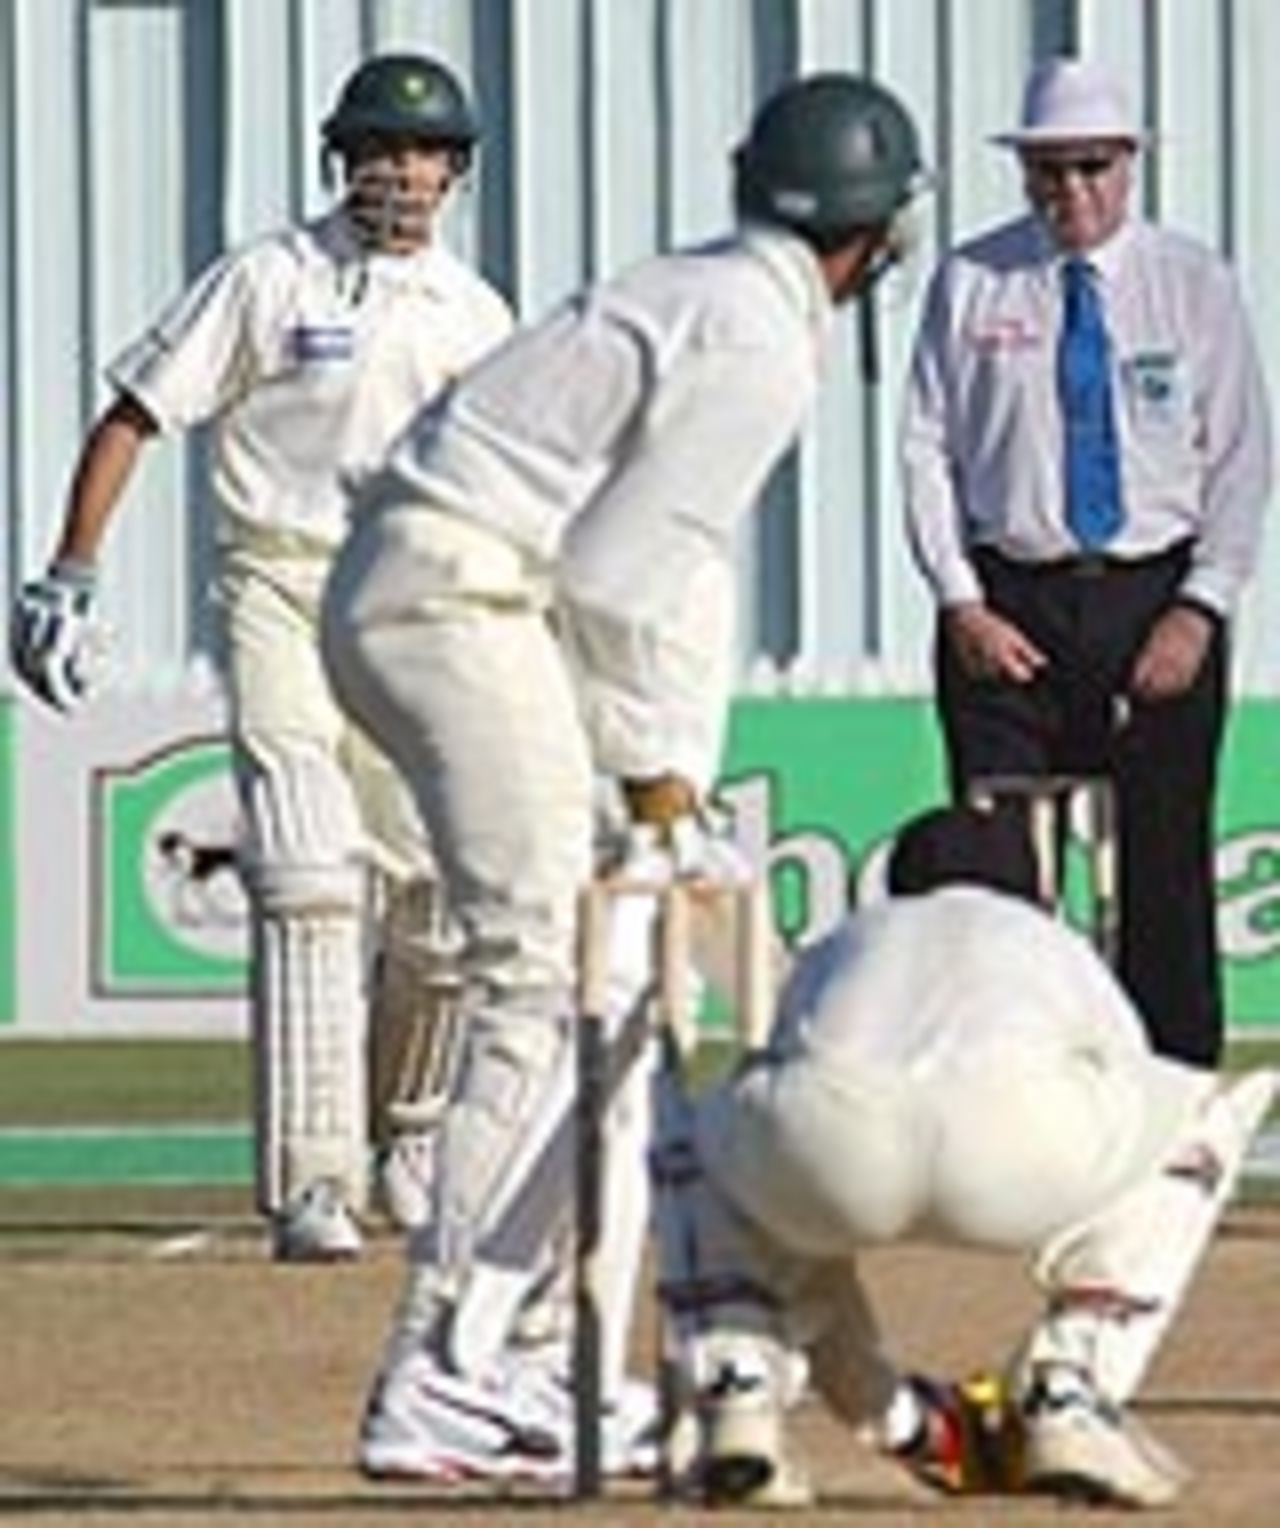 Shabbir Ahmed and Steve Davis, the umpire, watch as Umar Gul prepares to face a ball, New Zealand v Pakistan, 1st Test, Hamilton, 4th day, December 22, 2003